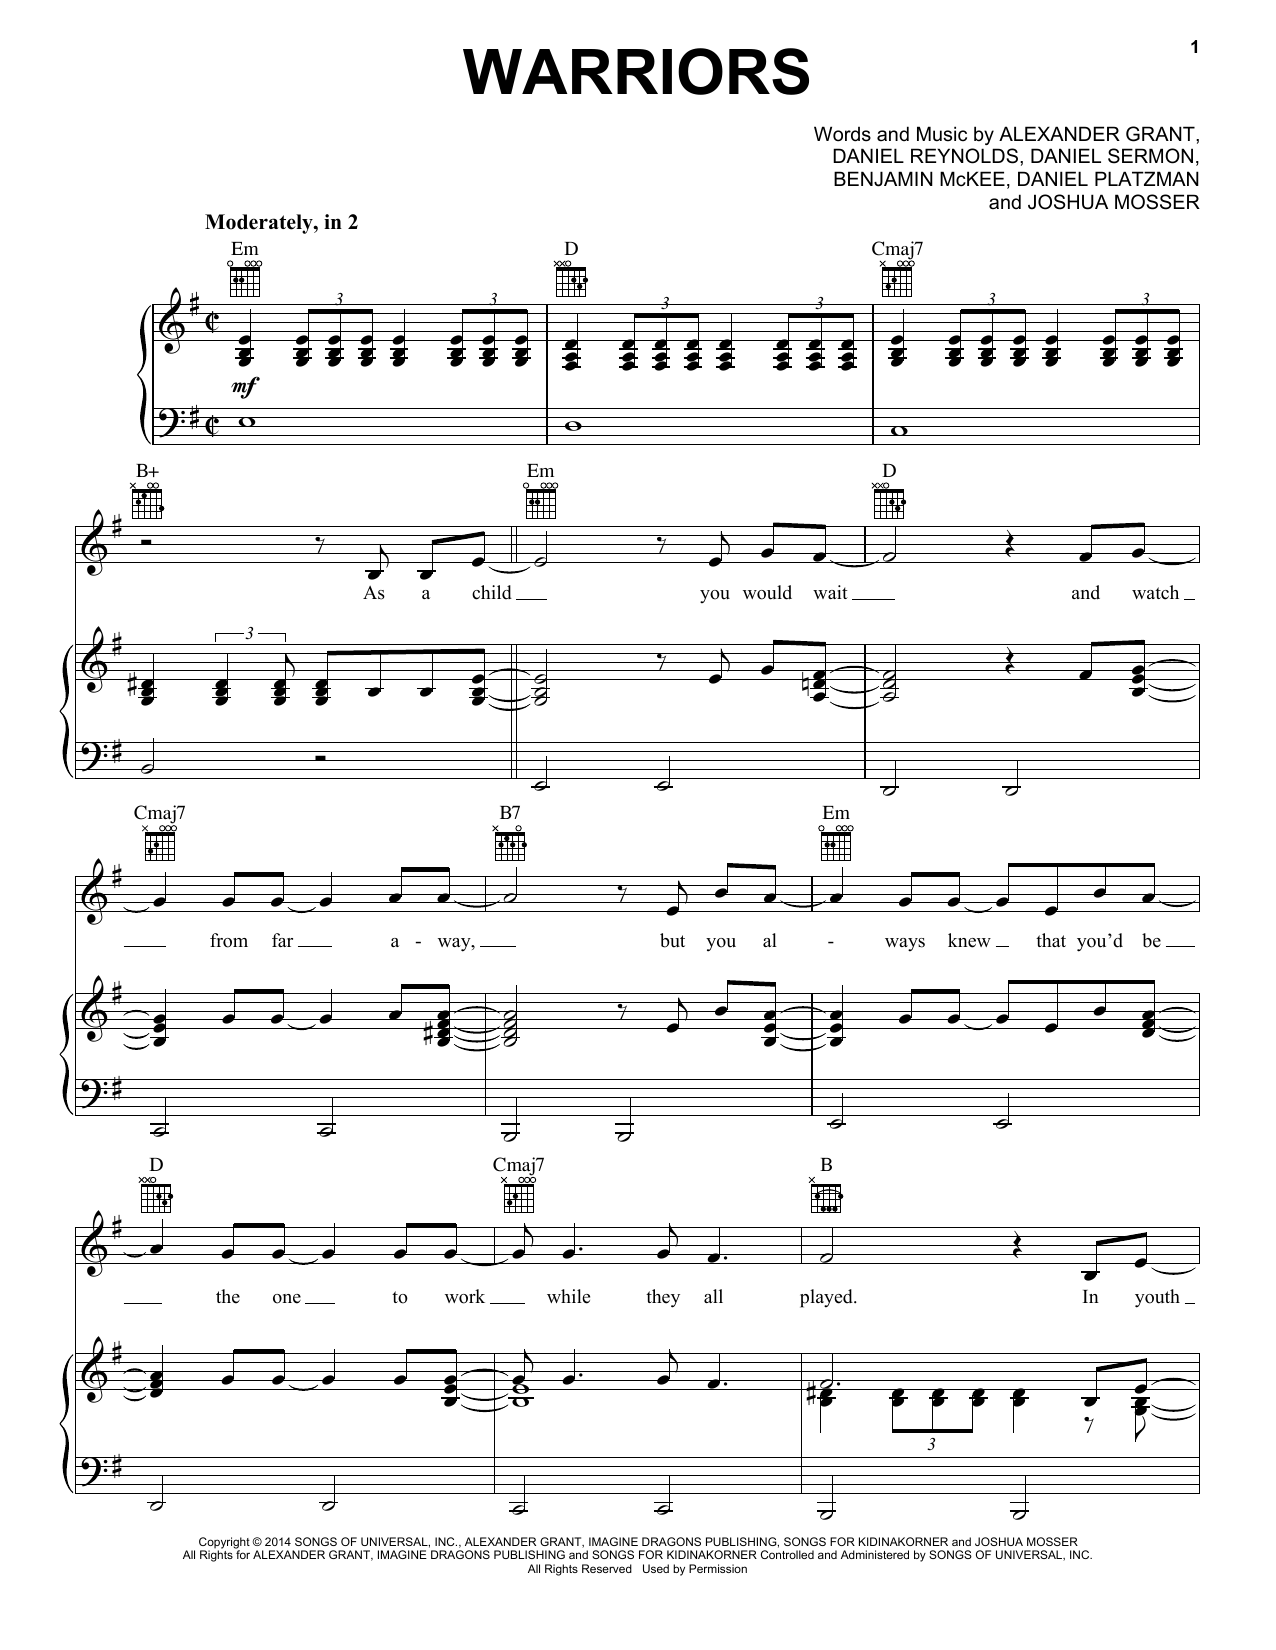 Imagine Dragons Warriors Sheet Music Notes & Chords for Ukulele - Download or Print PDF